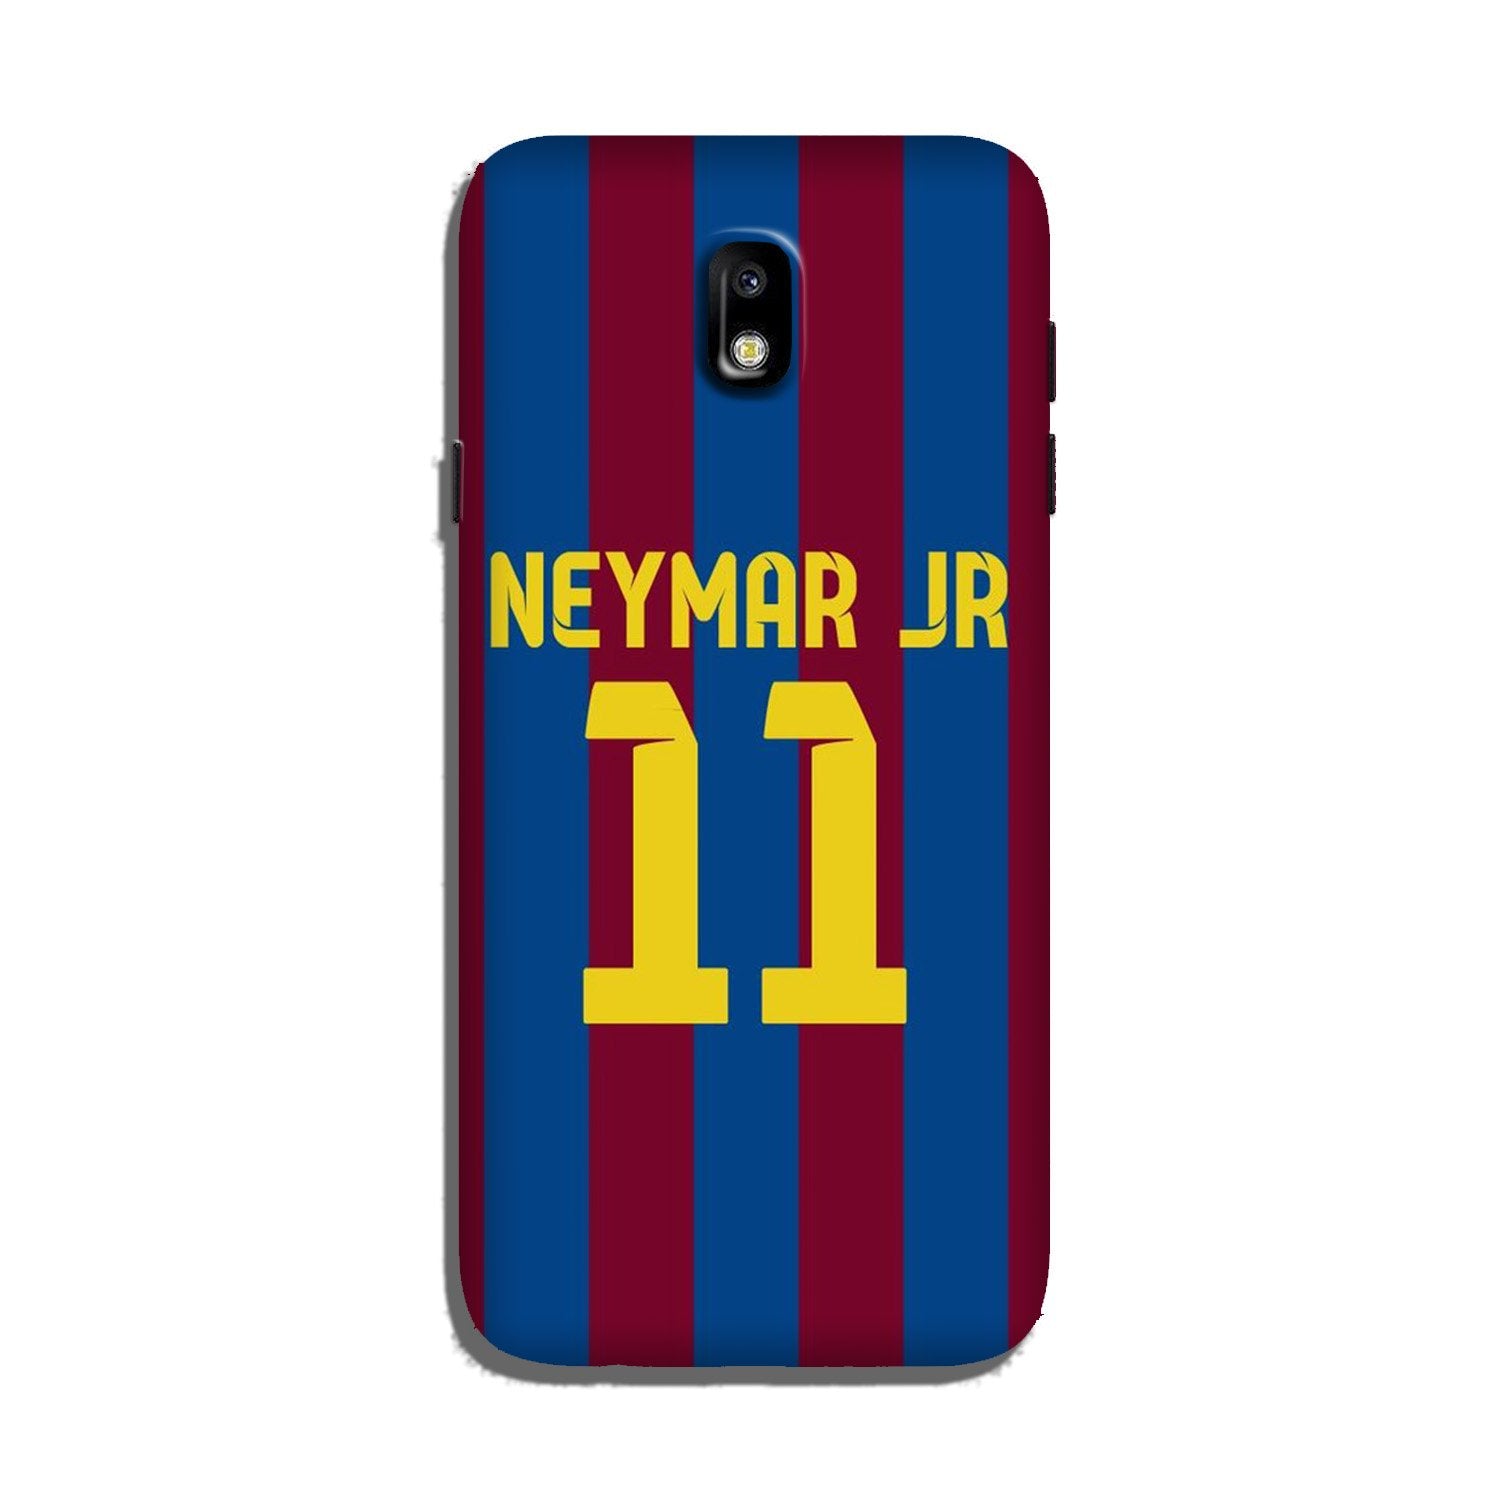 Neymar Jr Case for Galaxy J5 Pro(Design - 162)